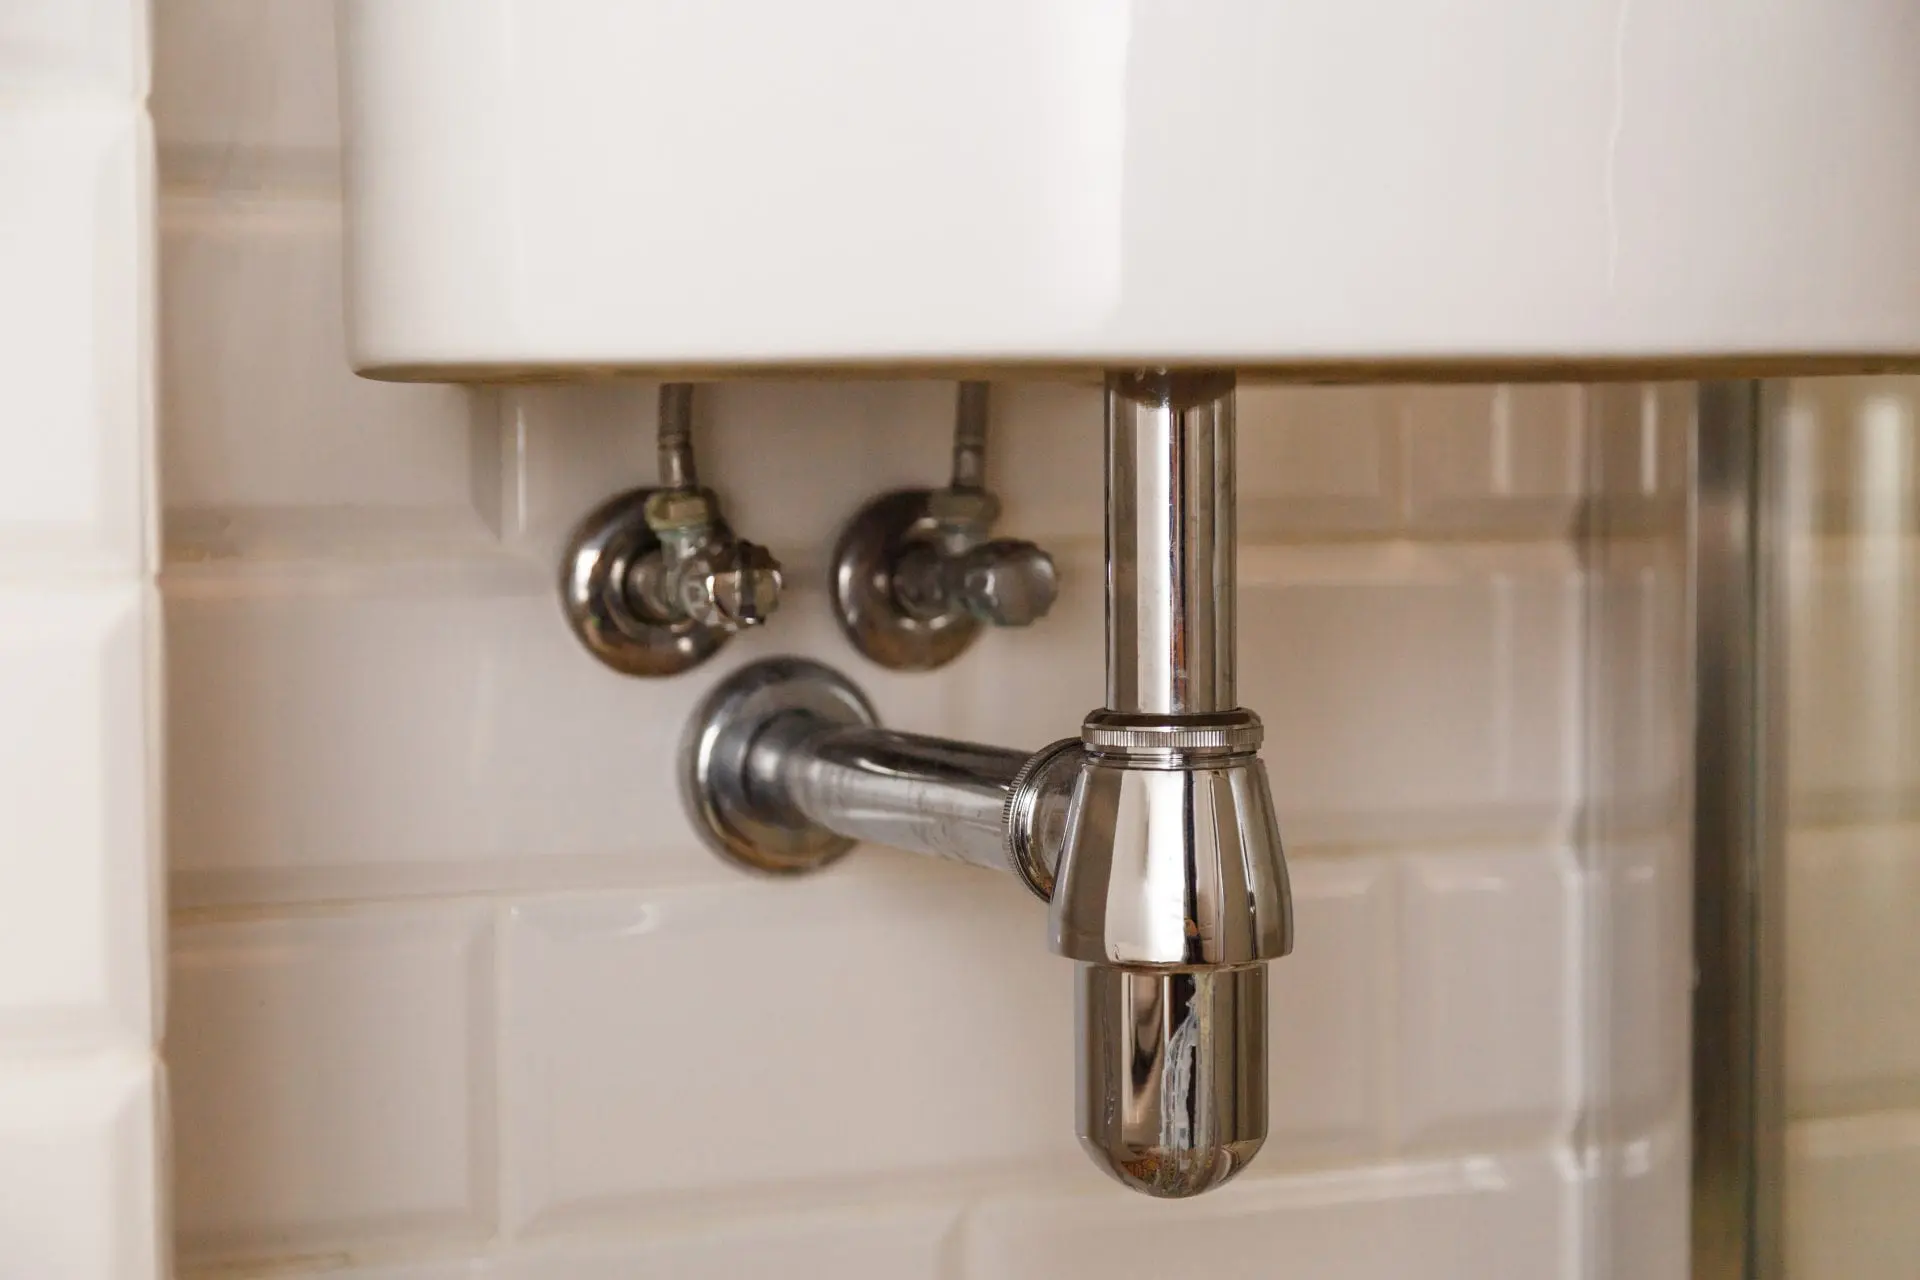 basin siphon or sink drain in a bathroom clean bz29aux - Green Group